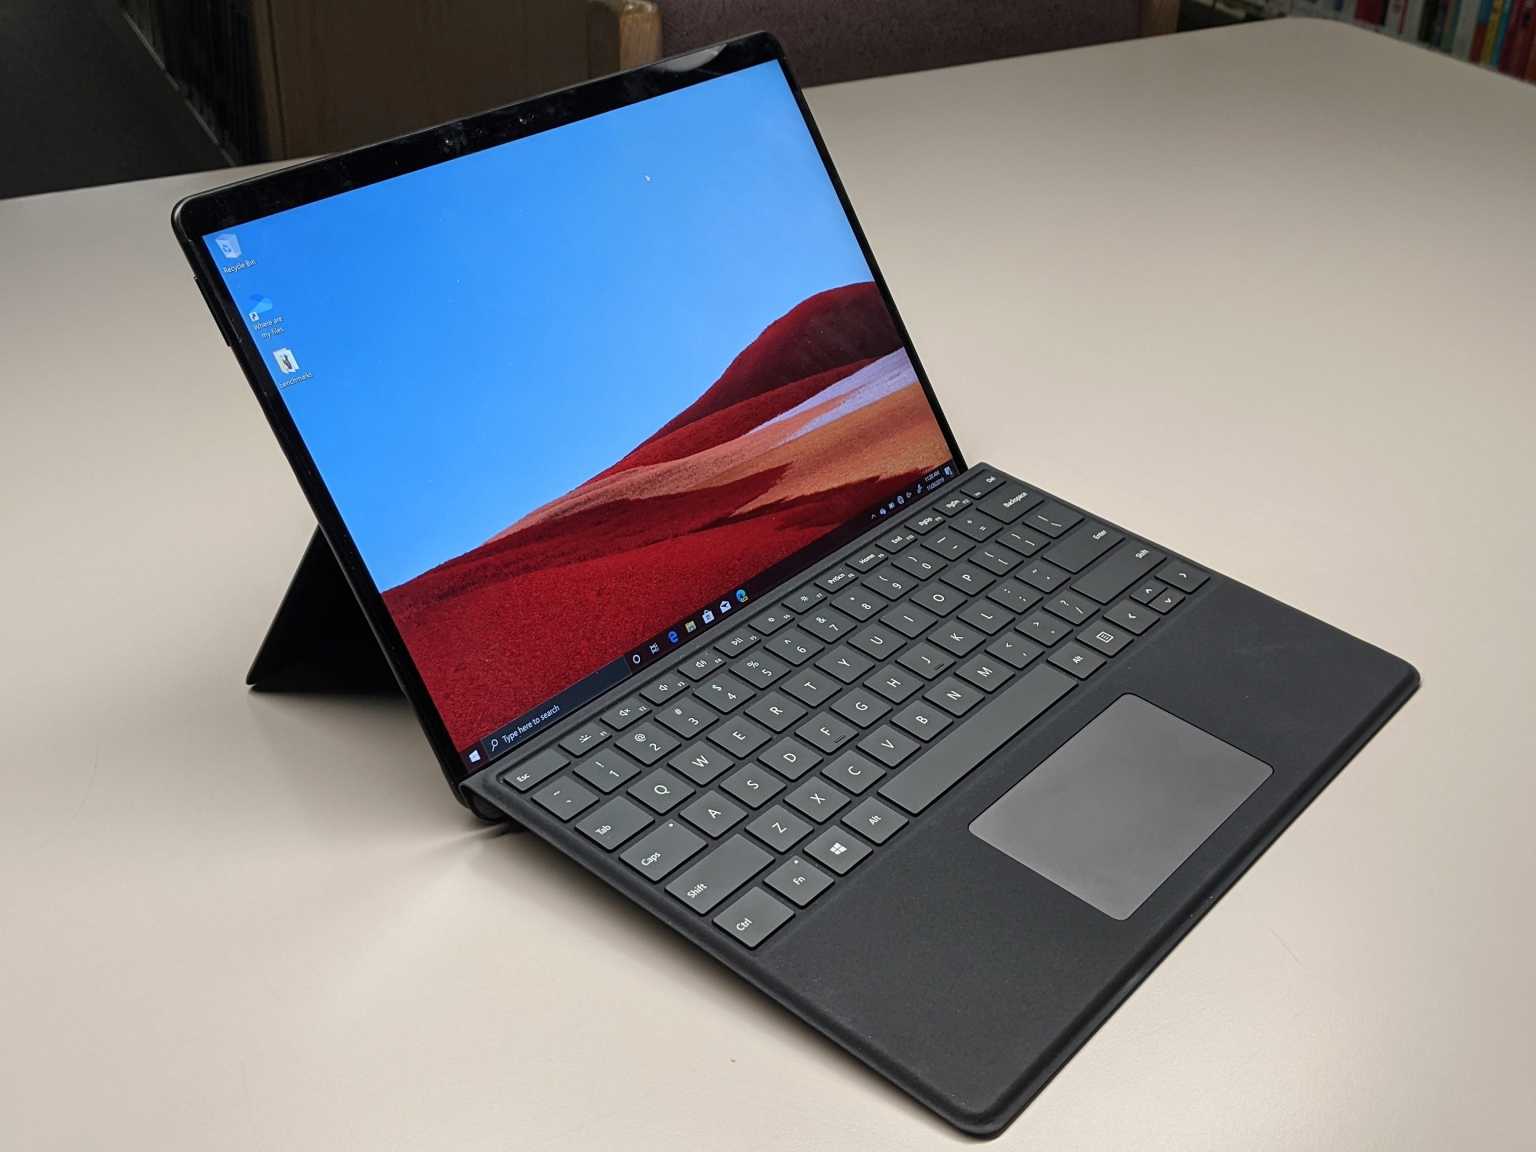 Microsoft kills desperately needed upgrades for Windows 10 Arm laptops